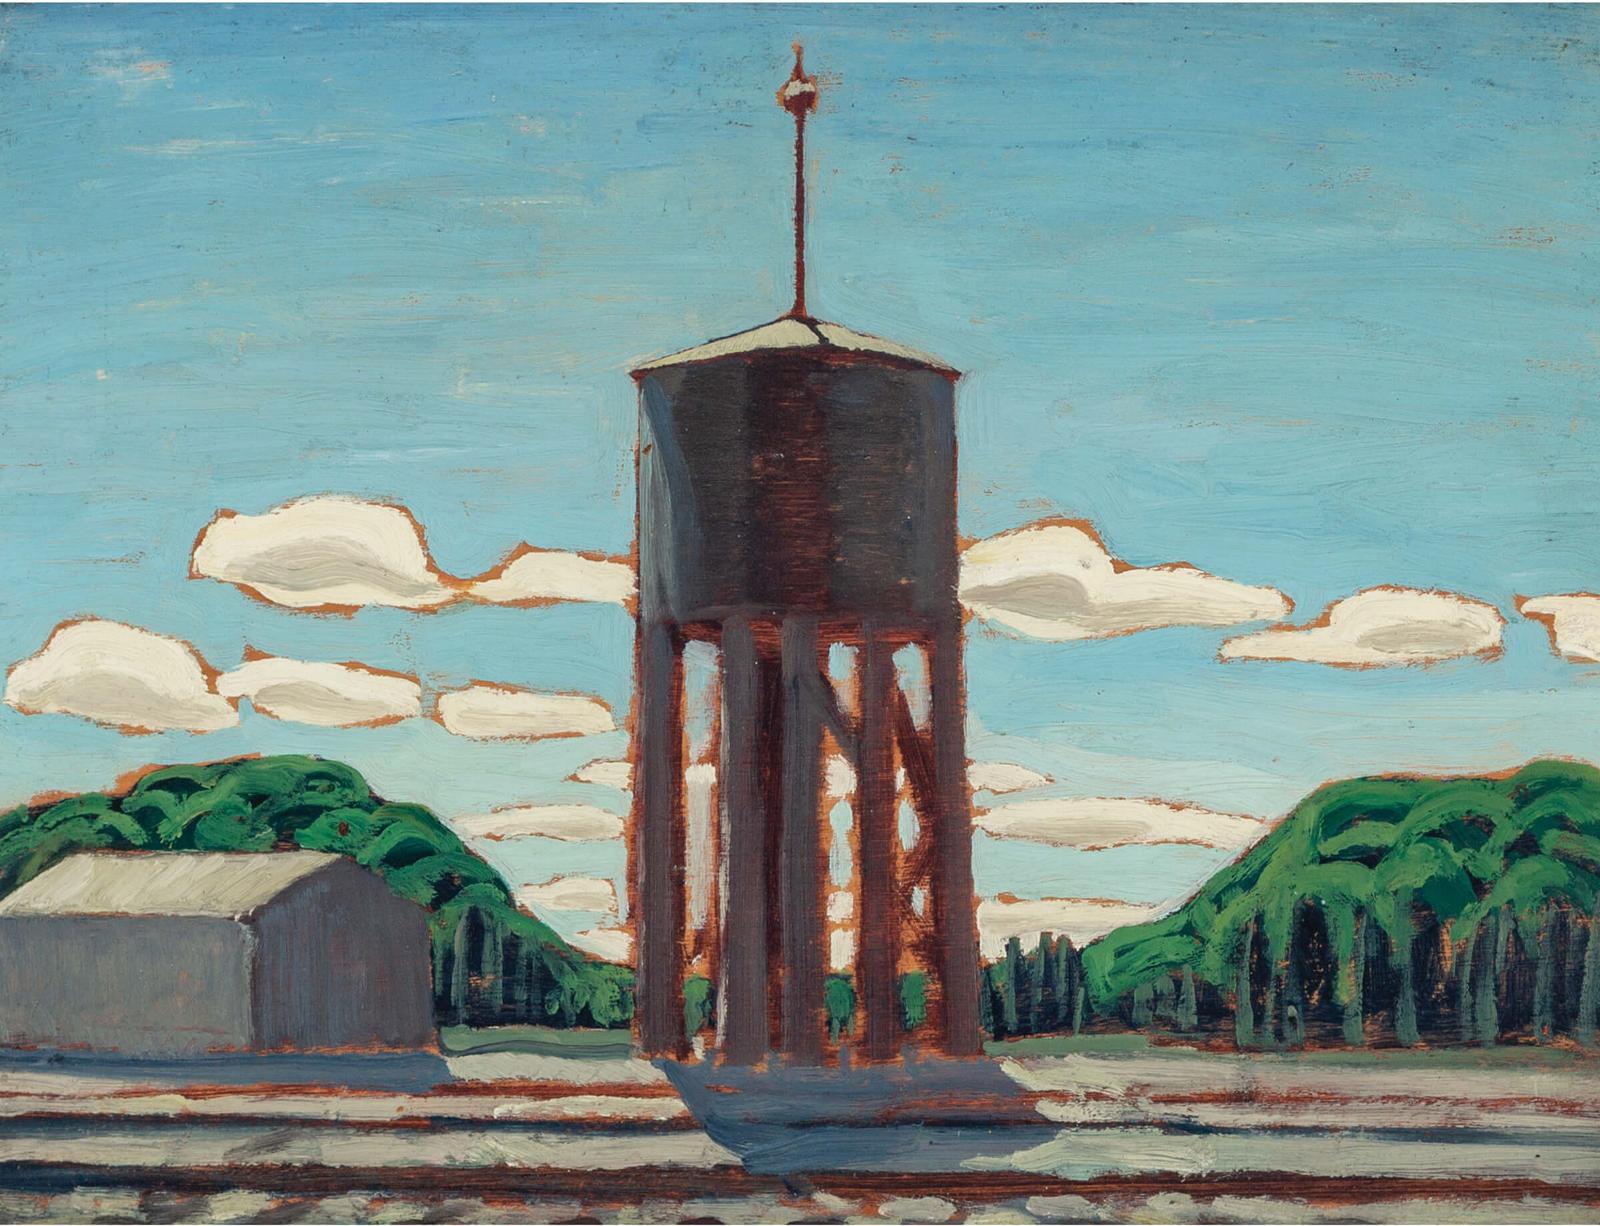 Lawren Stewart Harris (1885-1970) - Watertower, Circa 1919